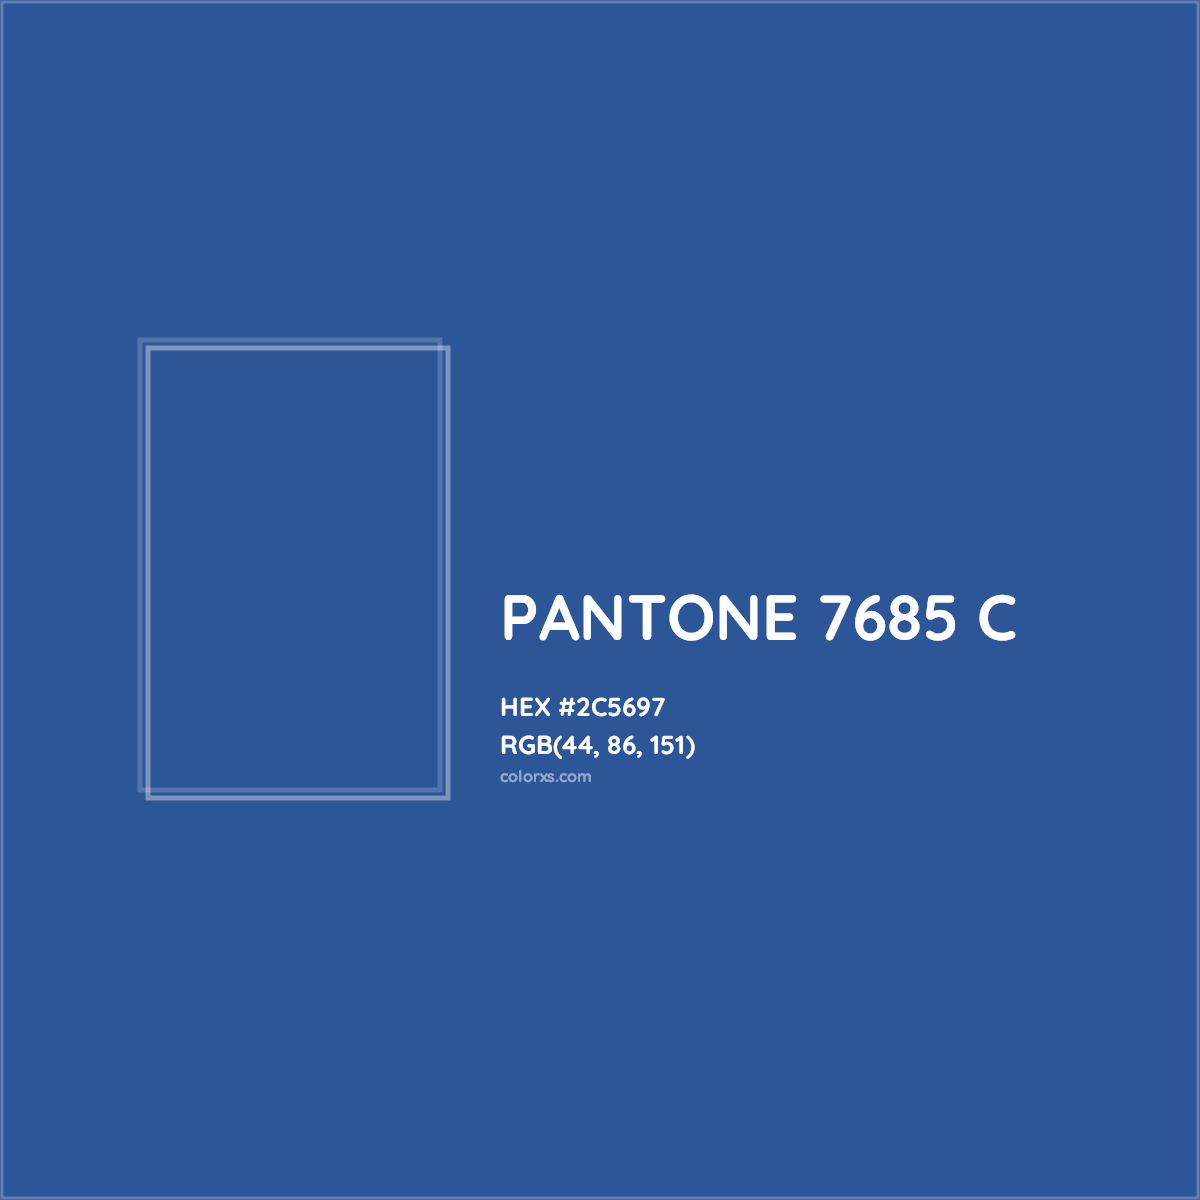 HEX #2C5697 PANTONE 7685 C CMS Pantone PMS - Color Code